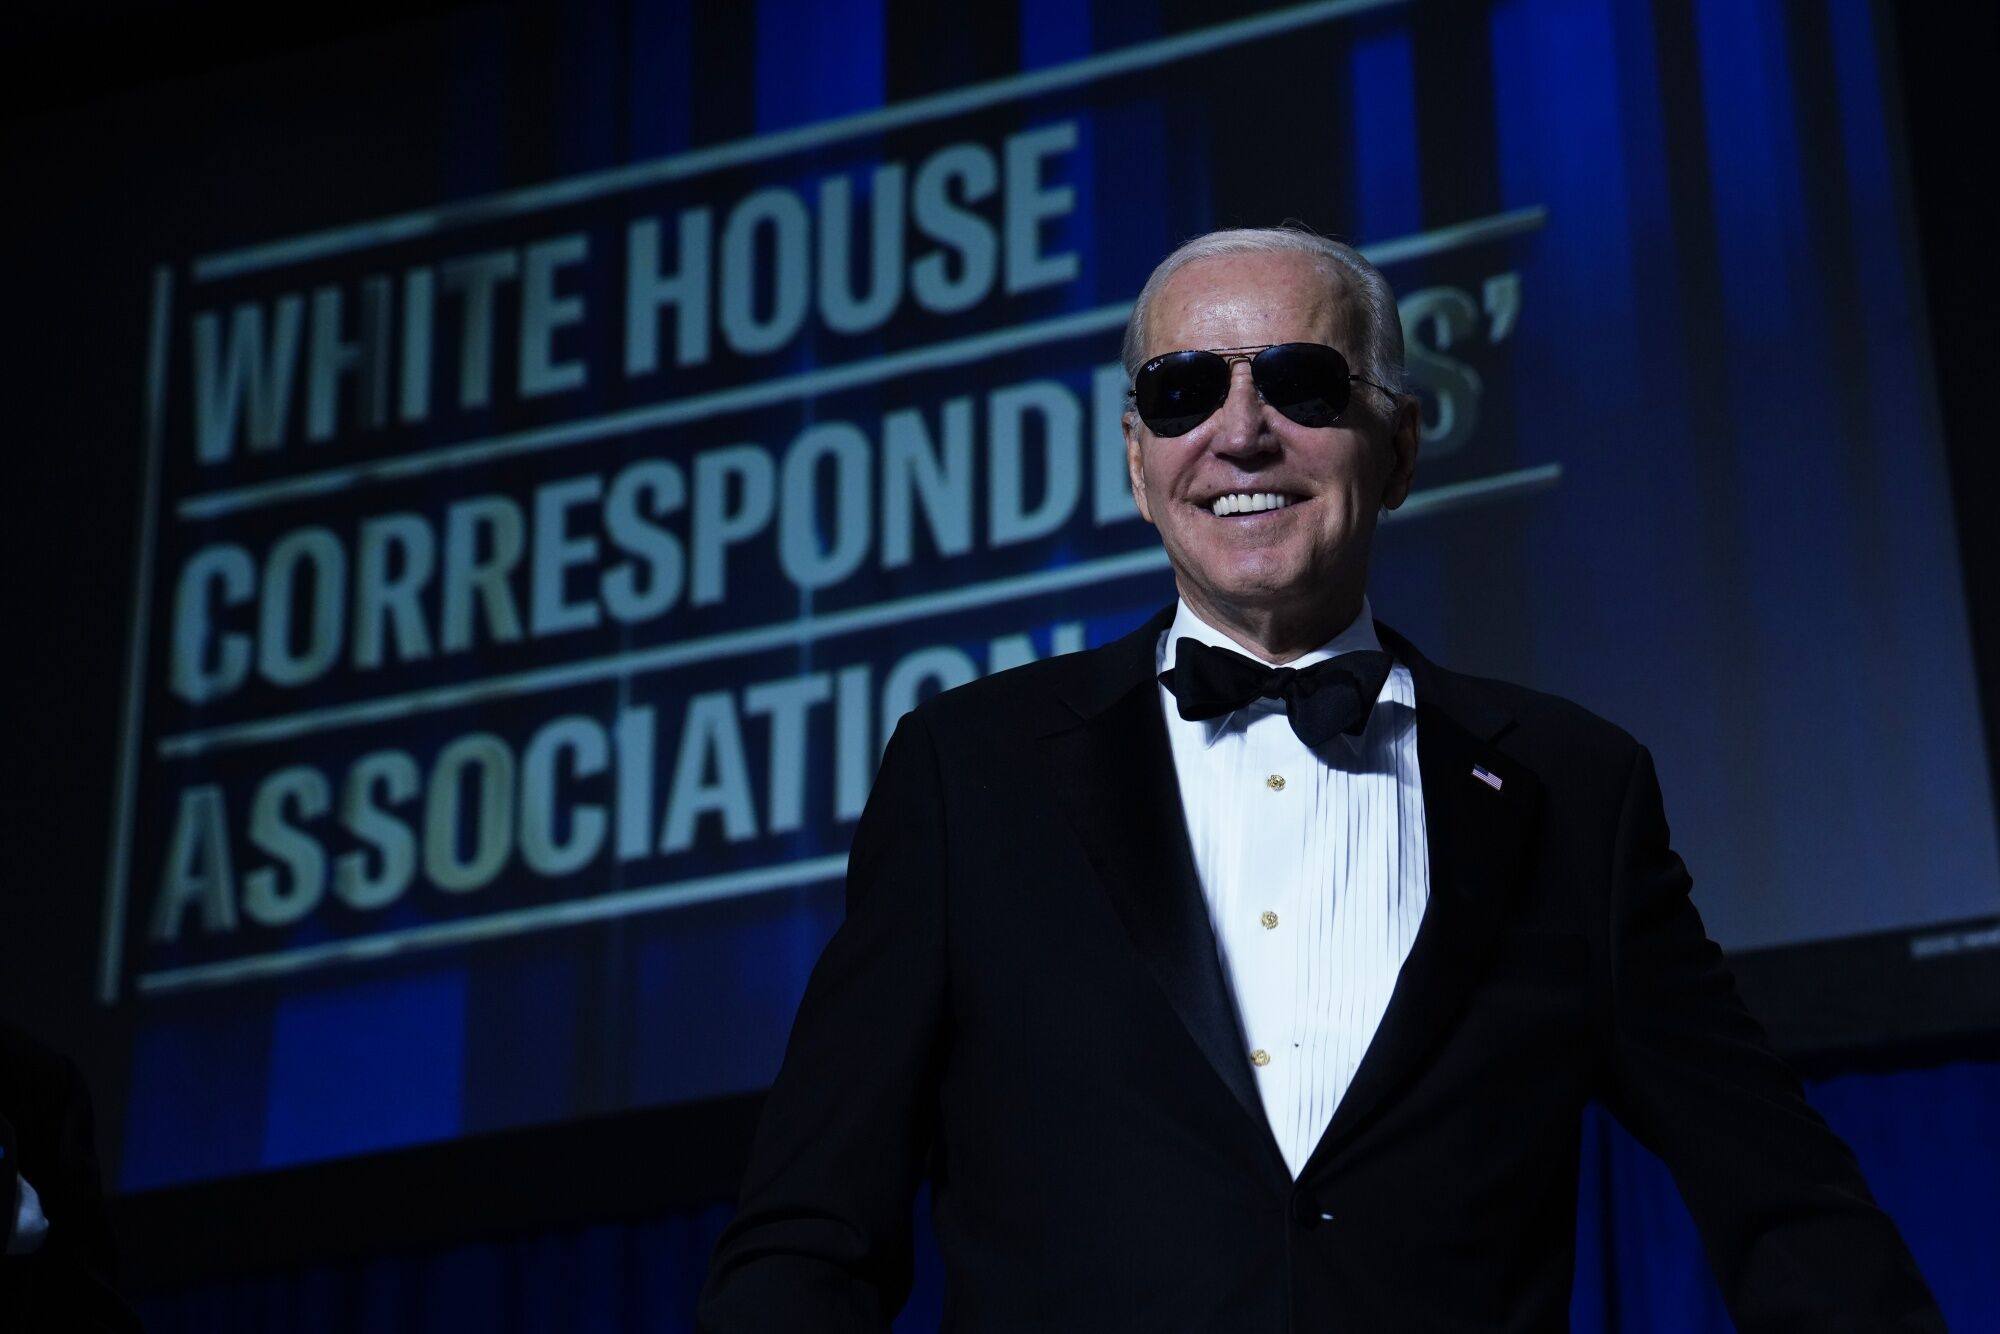 US President Joe Biden speaks during the White House Correspondents’ Association (WHCA) dinner in Washington. Photo: Bloomberg